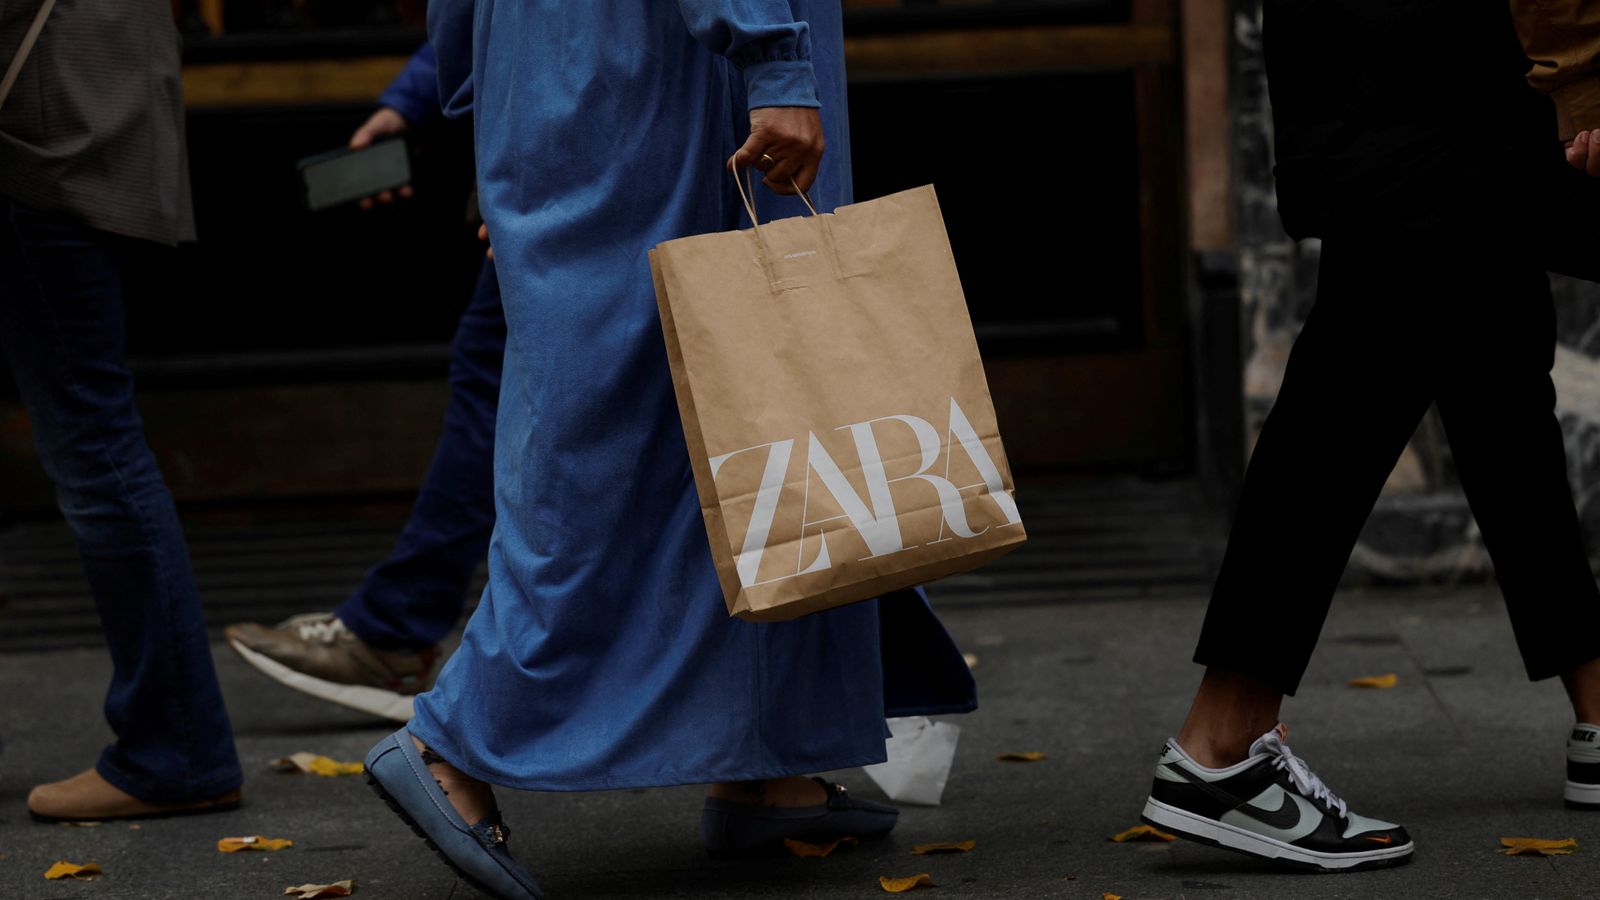 Zara 'regrets misunderstanding' as it pulls advert accused of resembling scenes from Gaza